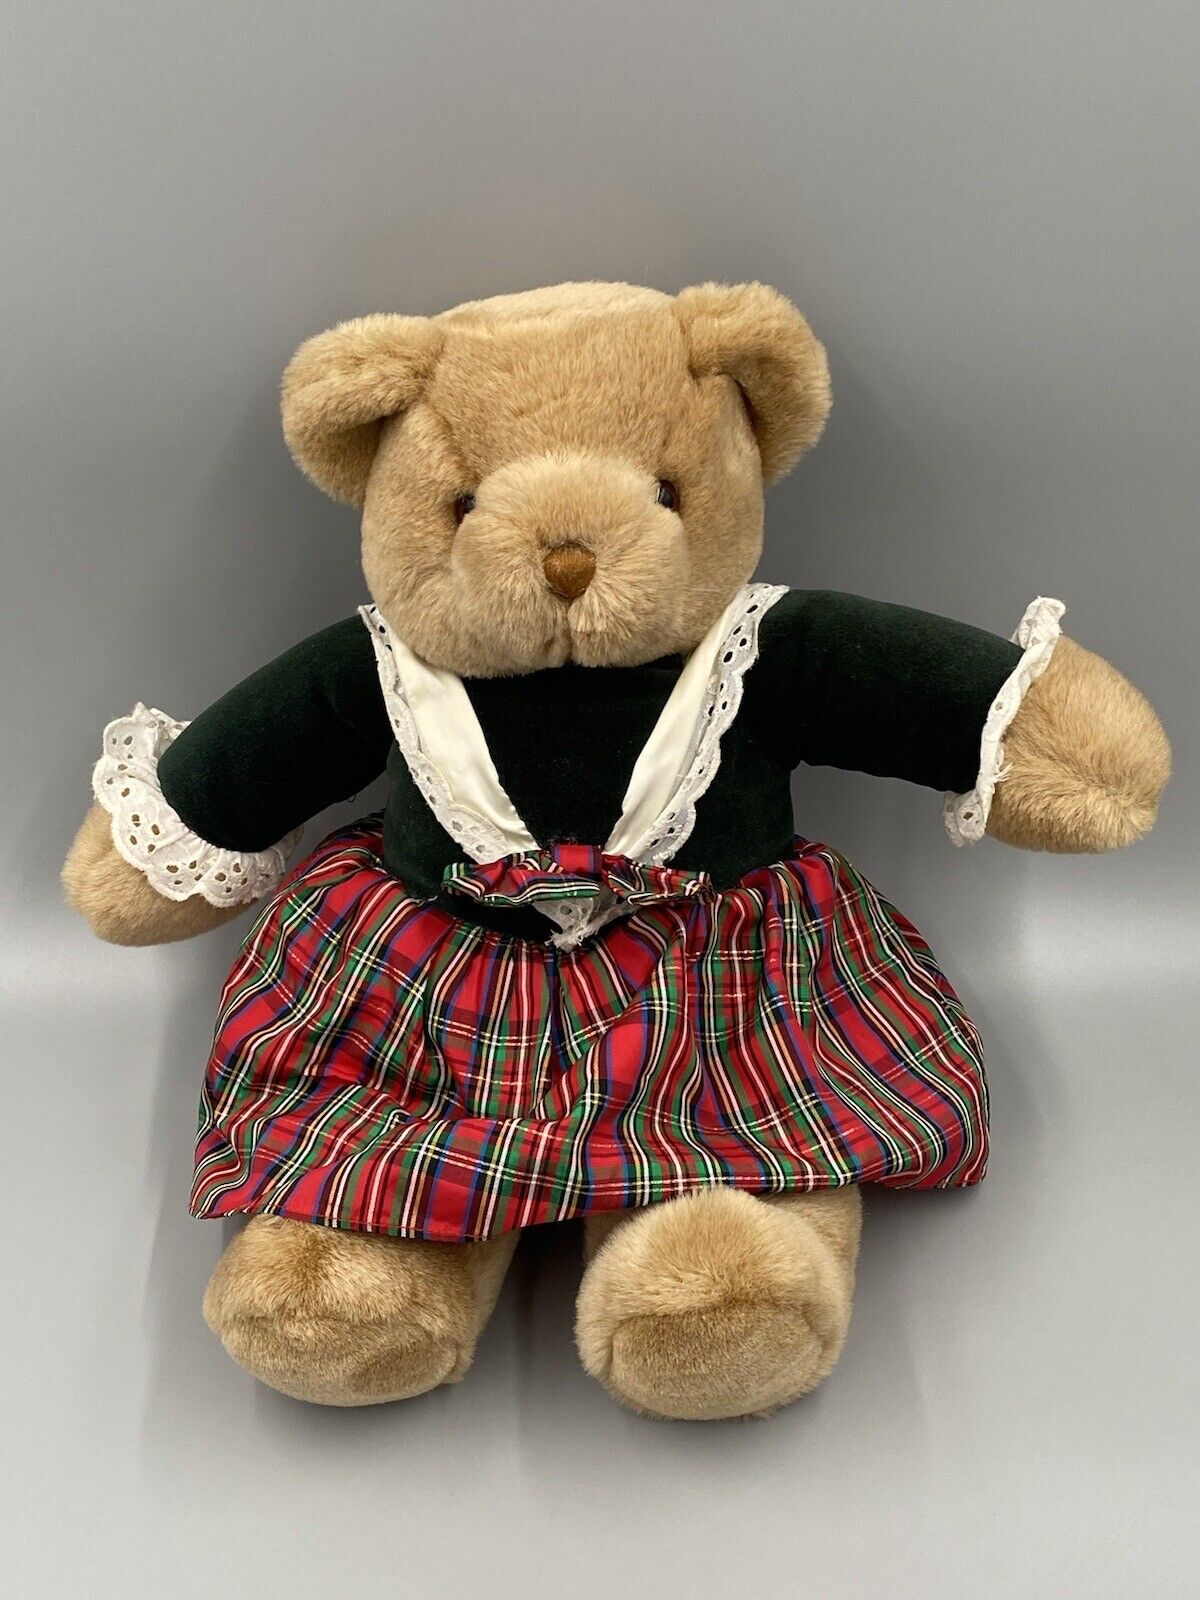 VTG 1990 Commonwealth Stuffed Teddy Bear 15” Plush In Christmas Plaid Dress